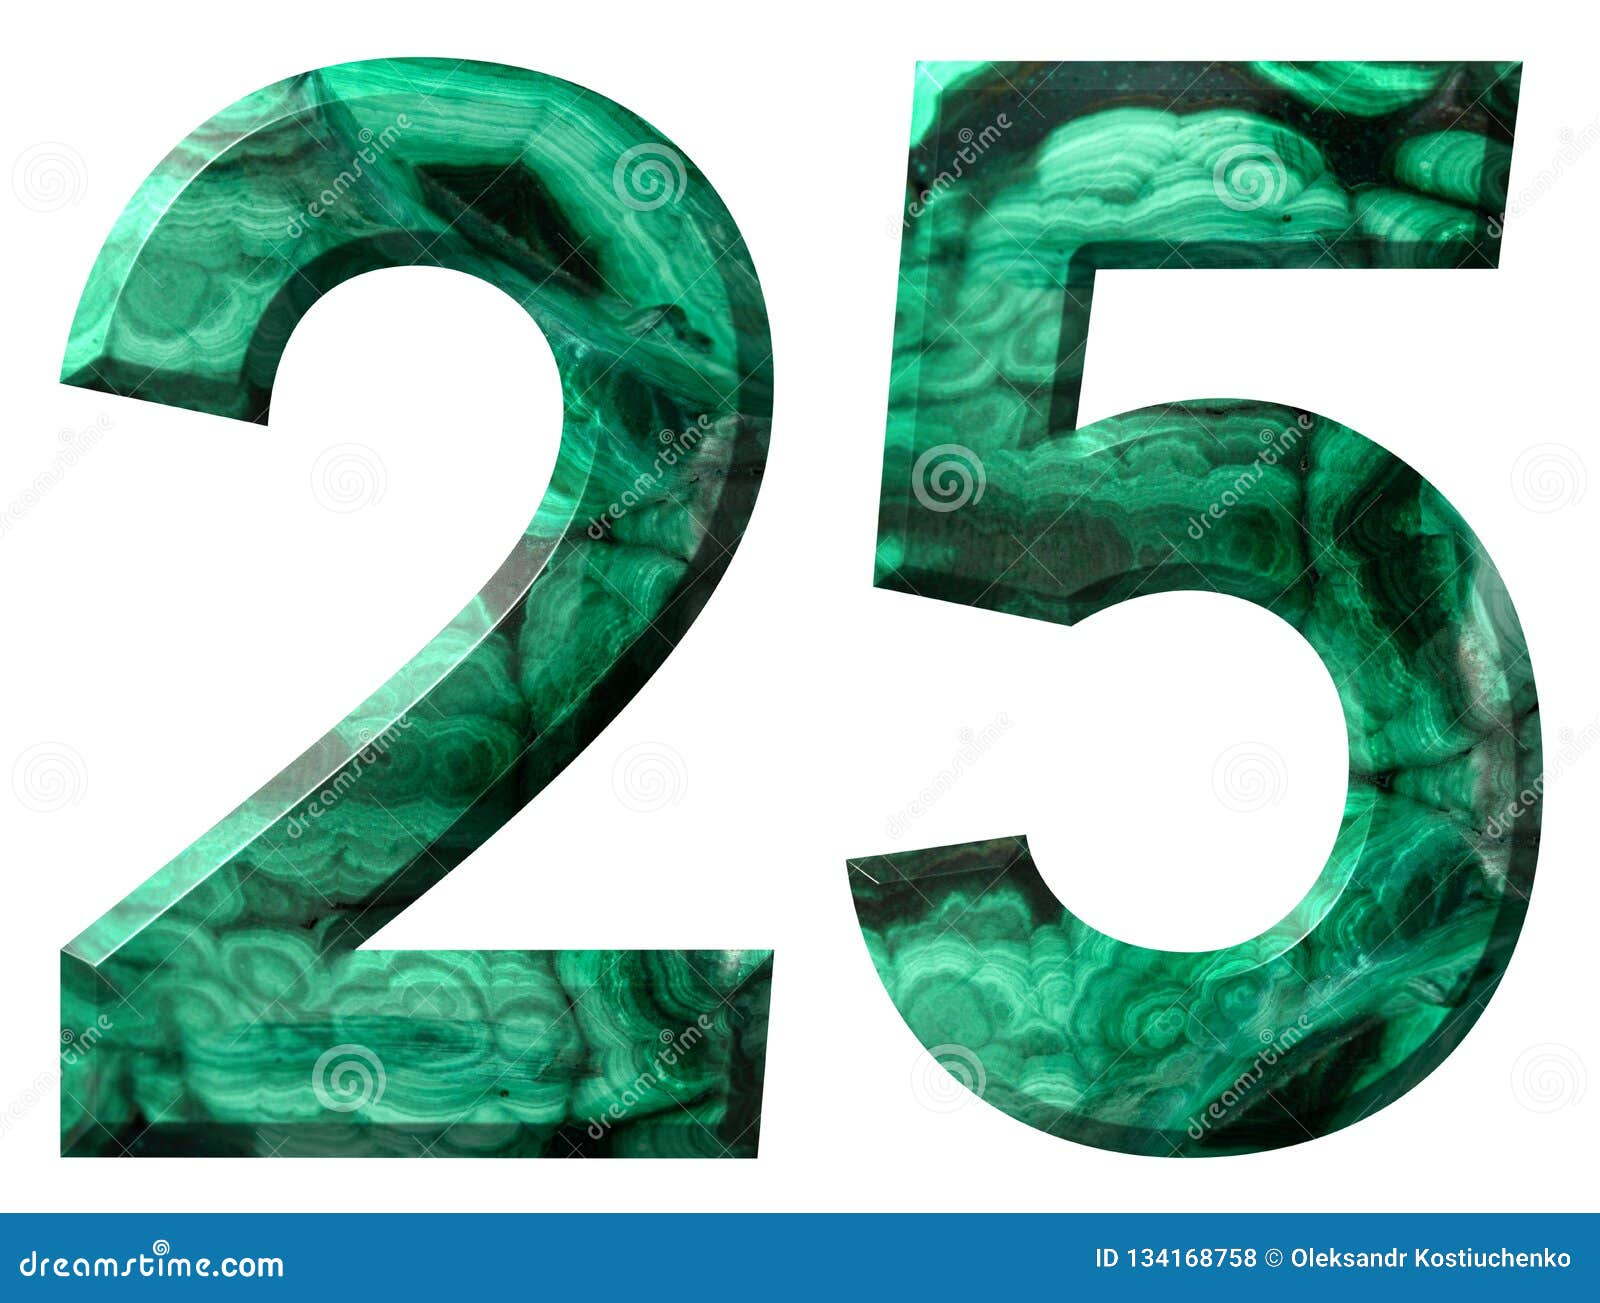 С 15 20 лет 25. Цифра 25. 25 Лет зеленые цифры. Цифра 25 на белом фоне. Красивая цифра 5 зеленая.